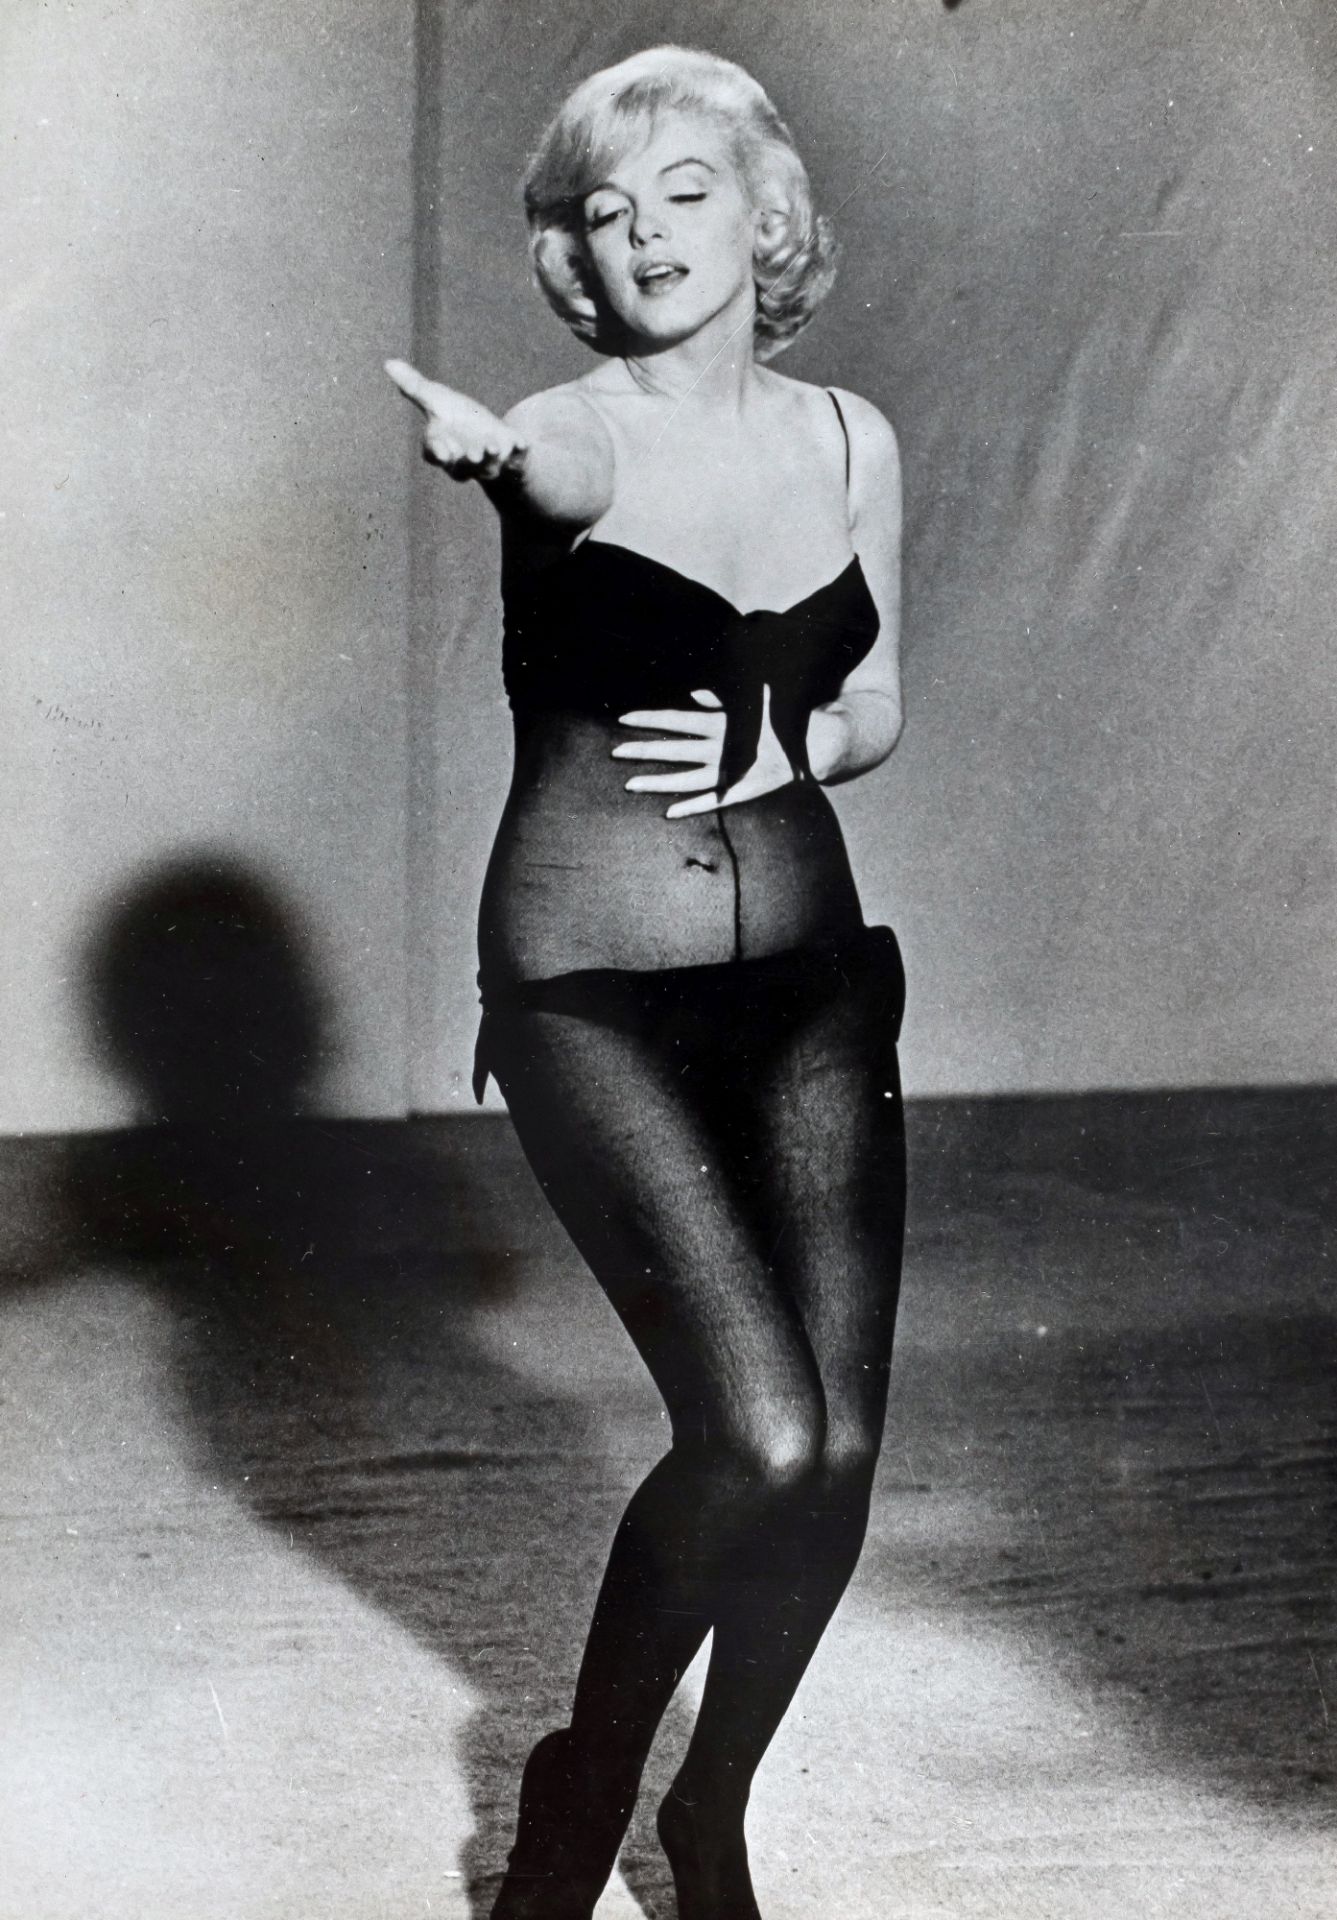 FOTOGRAFIE | 7 Pressefotos von Marilyn Monroe und 1 Notenblatt "Some Like It Hot" - Image 2 of 9